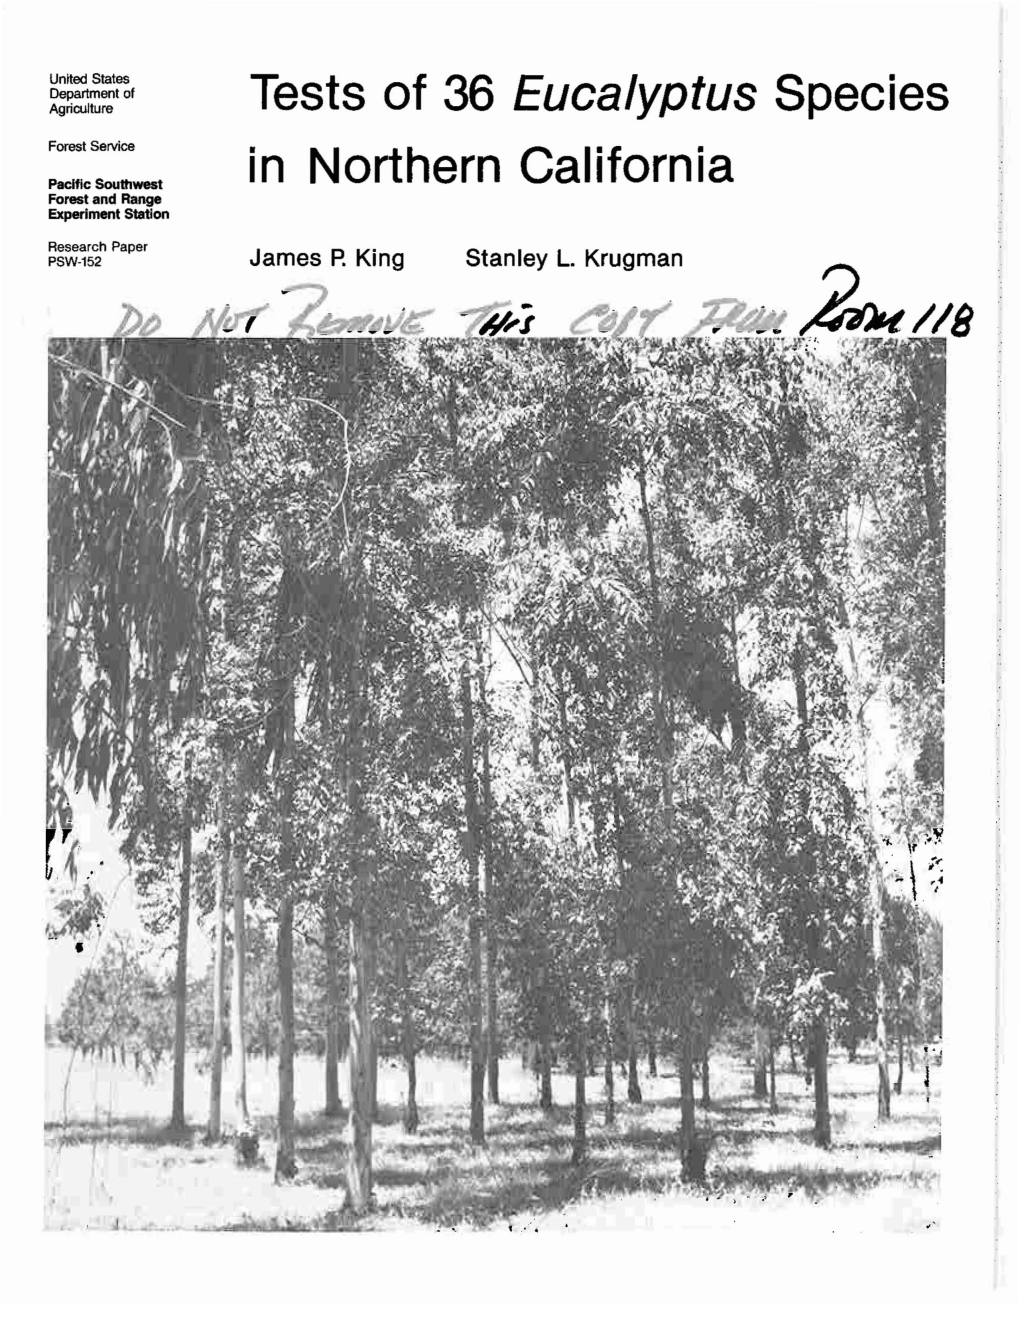 Tests of 36 Eucalyptus Species in Northern California